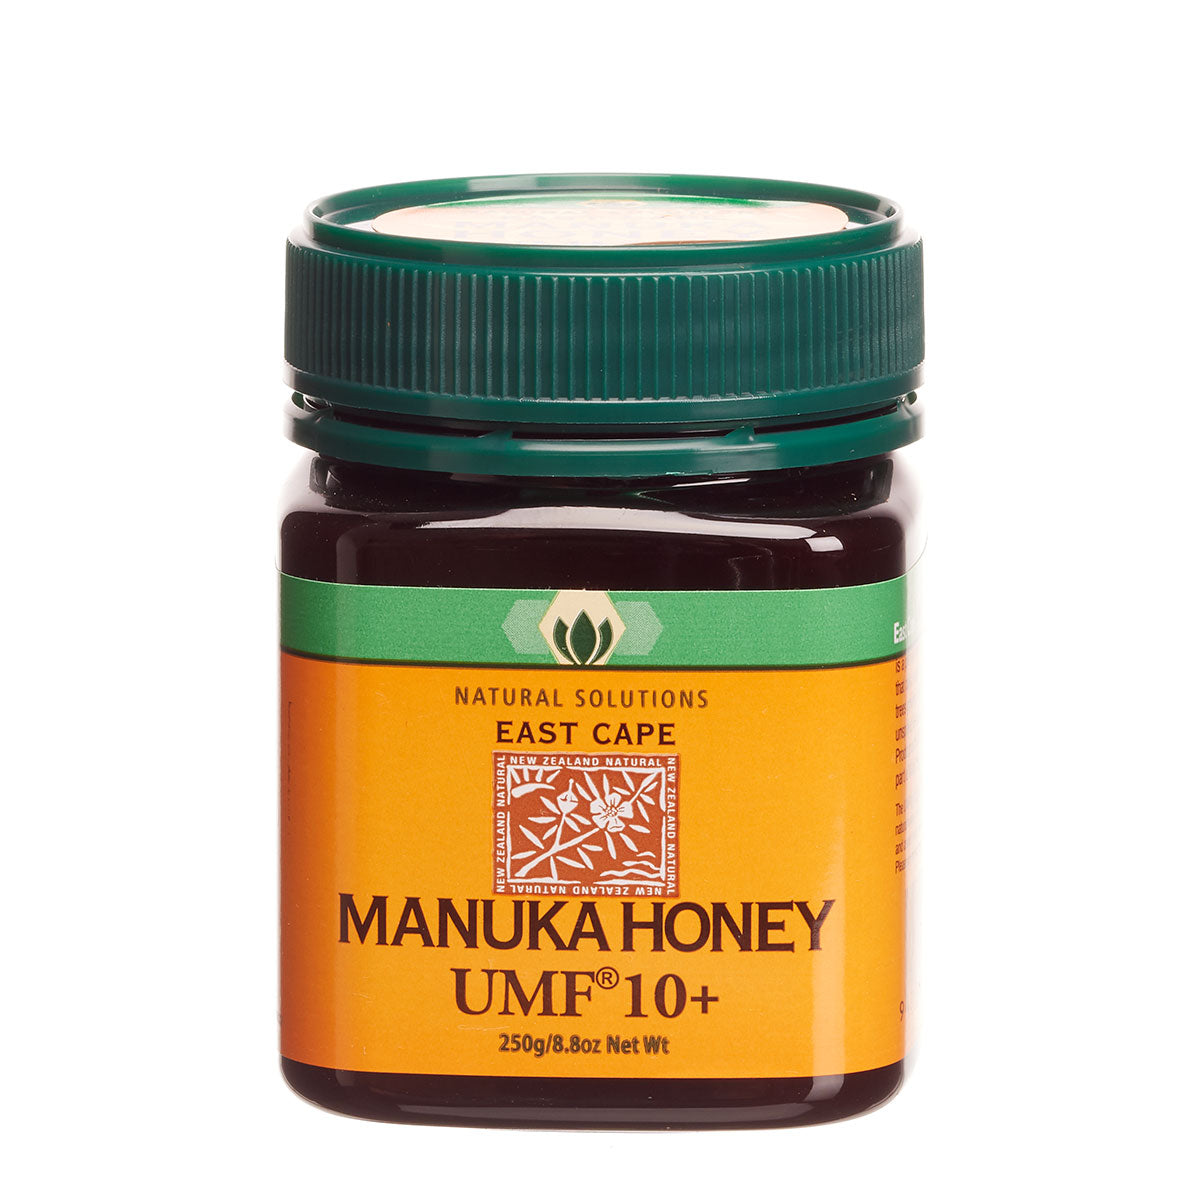 Where to buy Authentic Manuka honey